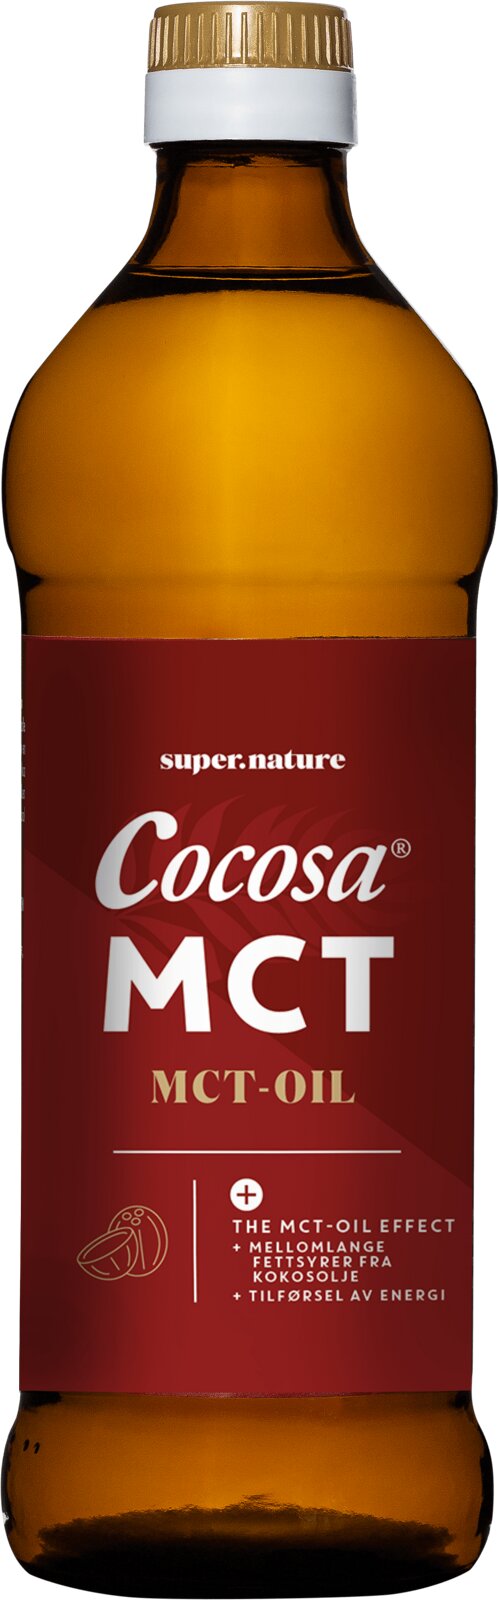 Supernature Cocosa MCT